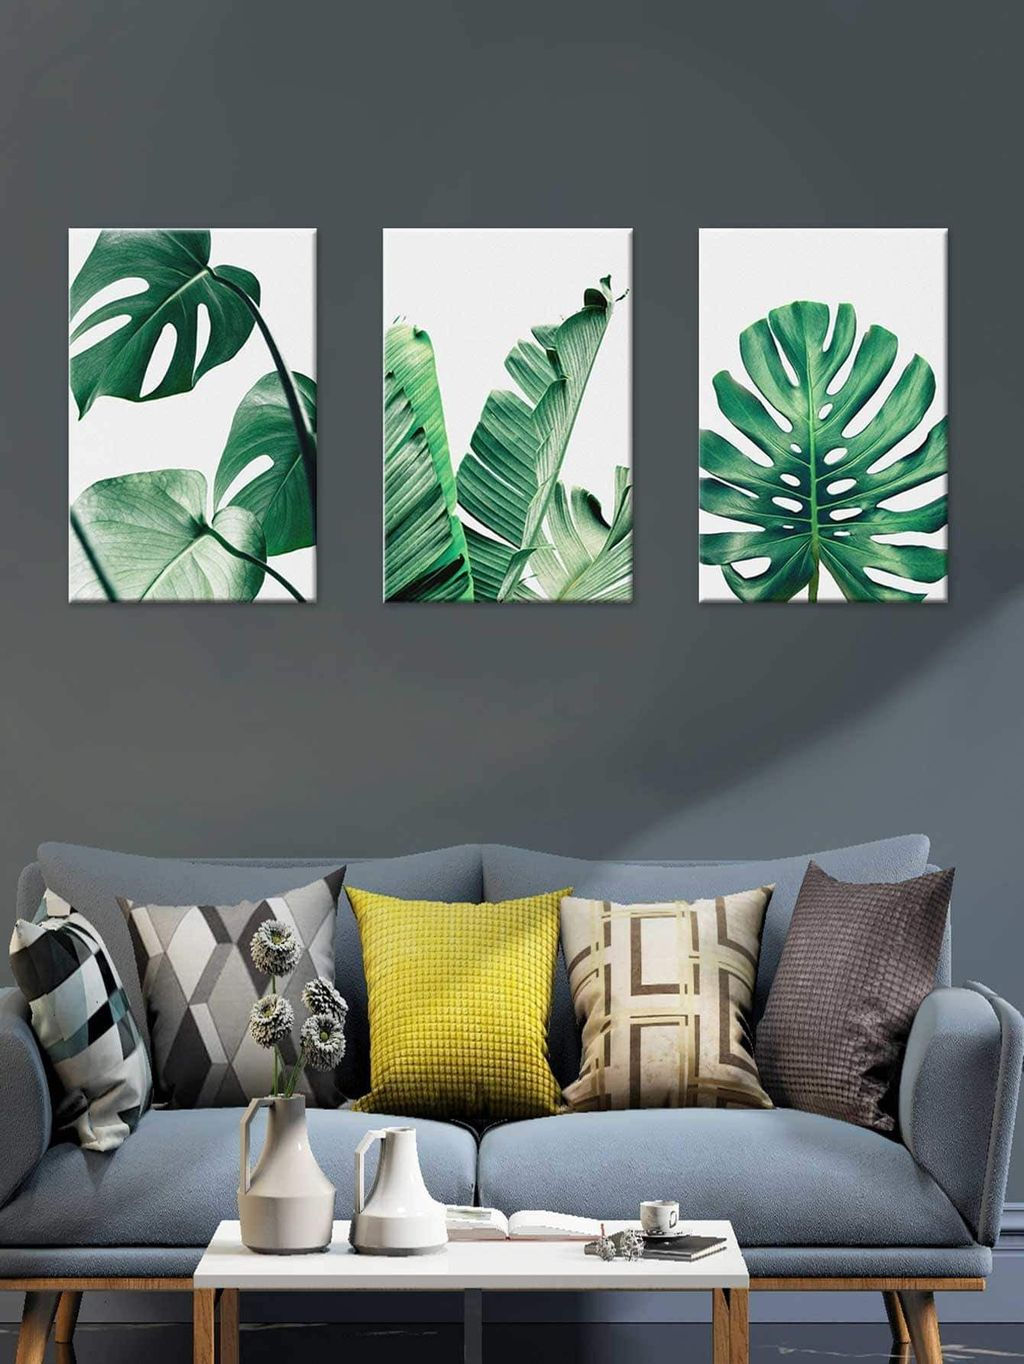 Splendid Tropical Leaf Decor Ideas For Home Design 03